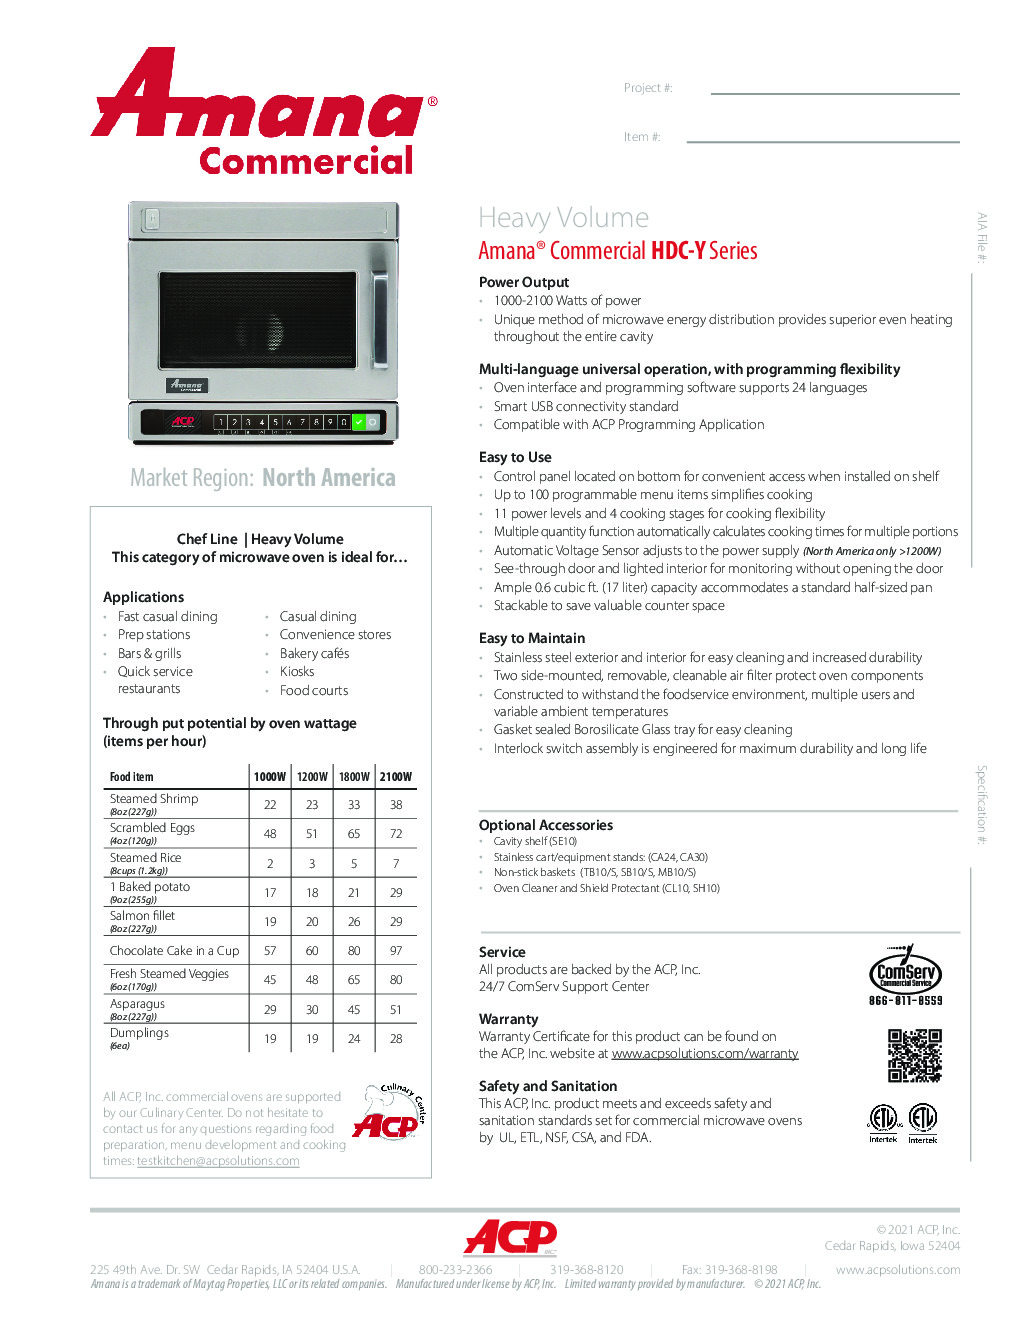 Amana HDC10Y15 Microwave Oven